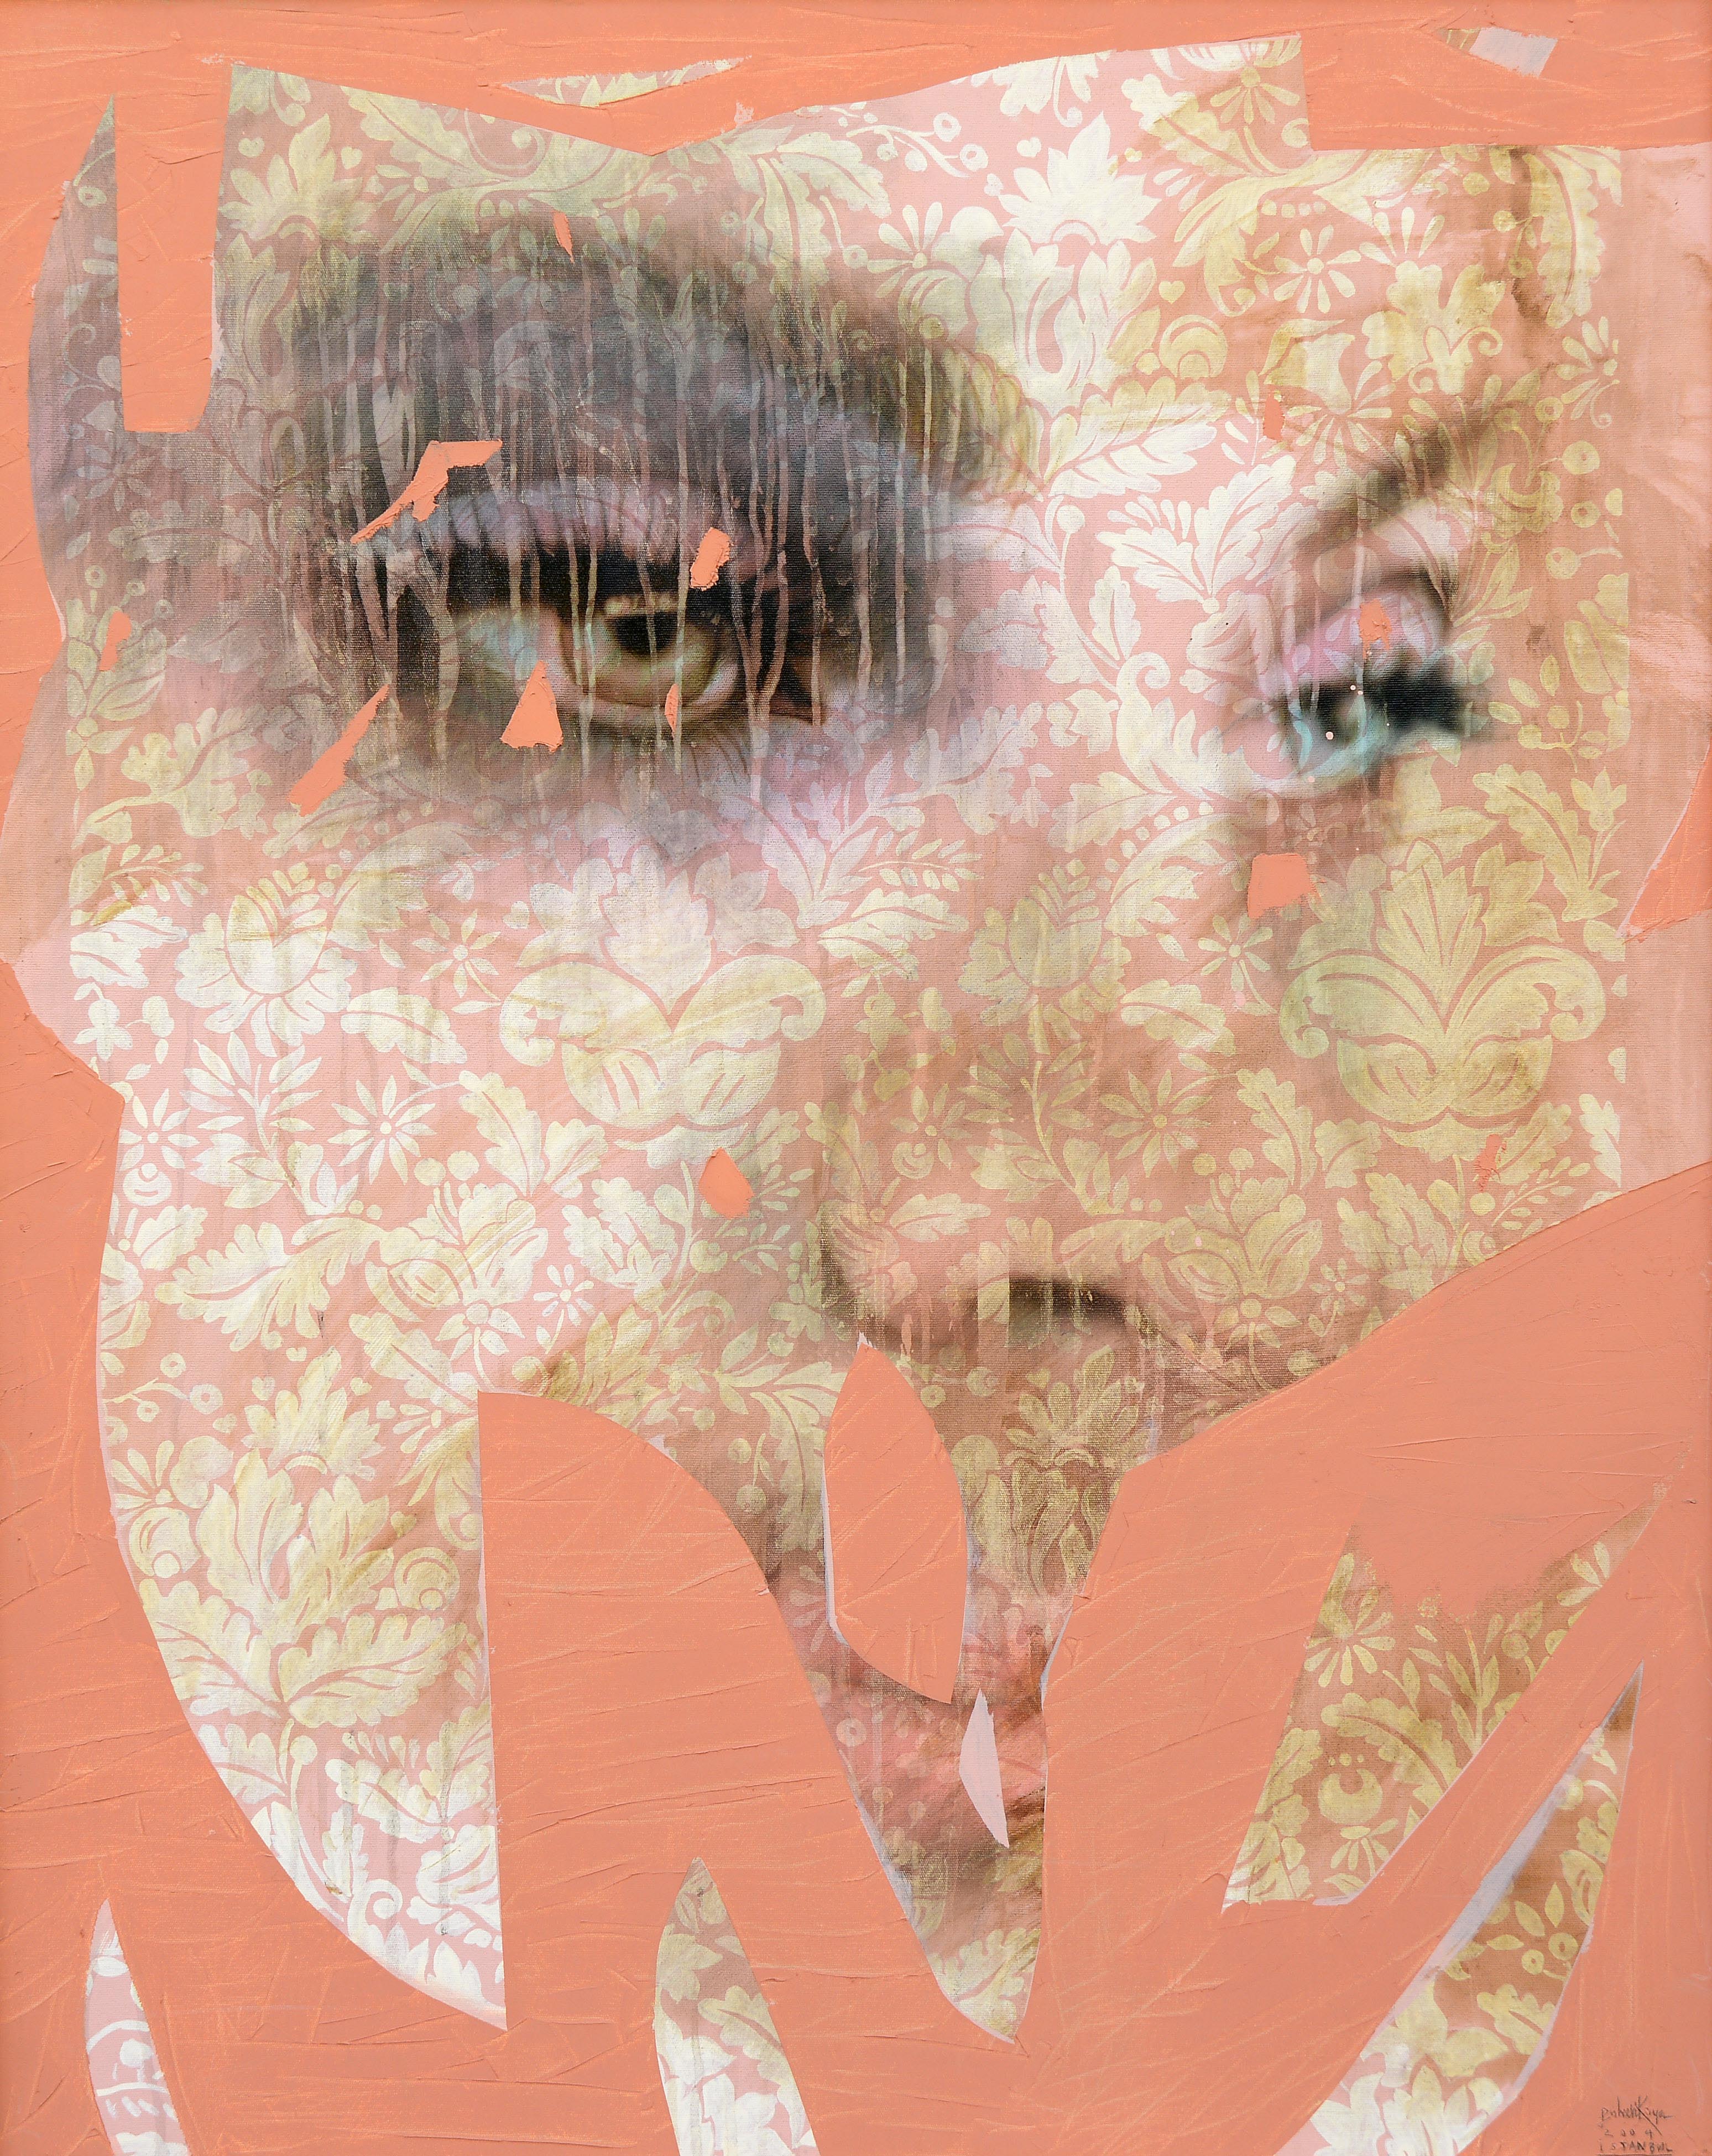 İsimsiz- Untitled, 2004, Tuval üzerine yağlıboya- Oil on canvas, 100X80 cm